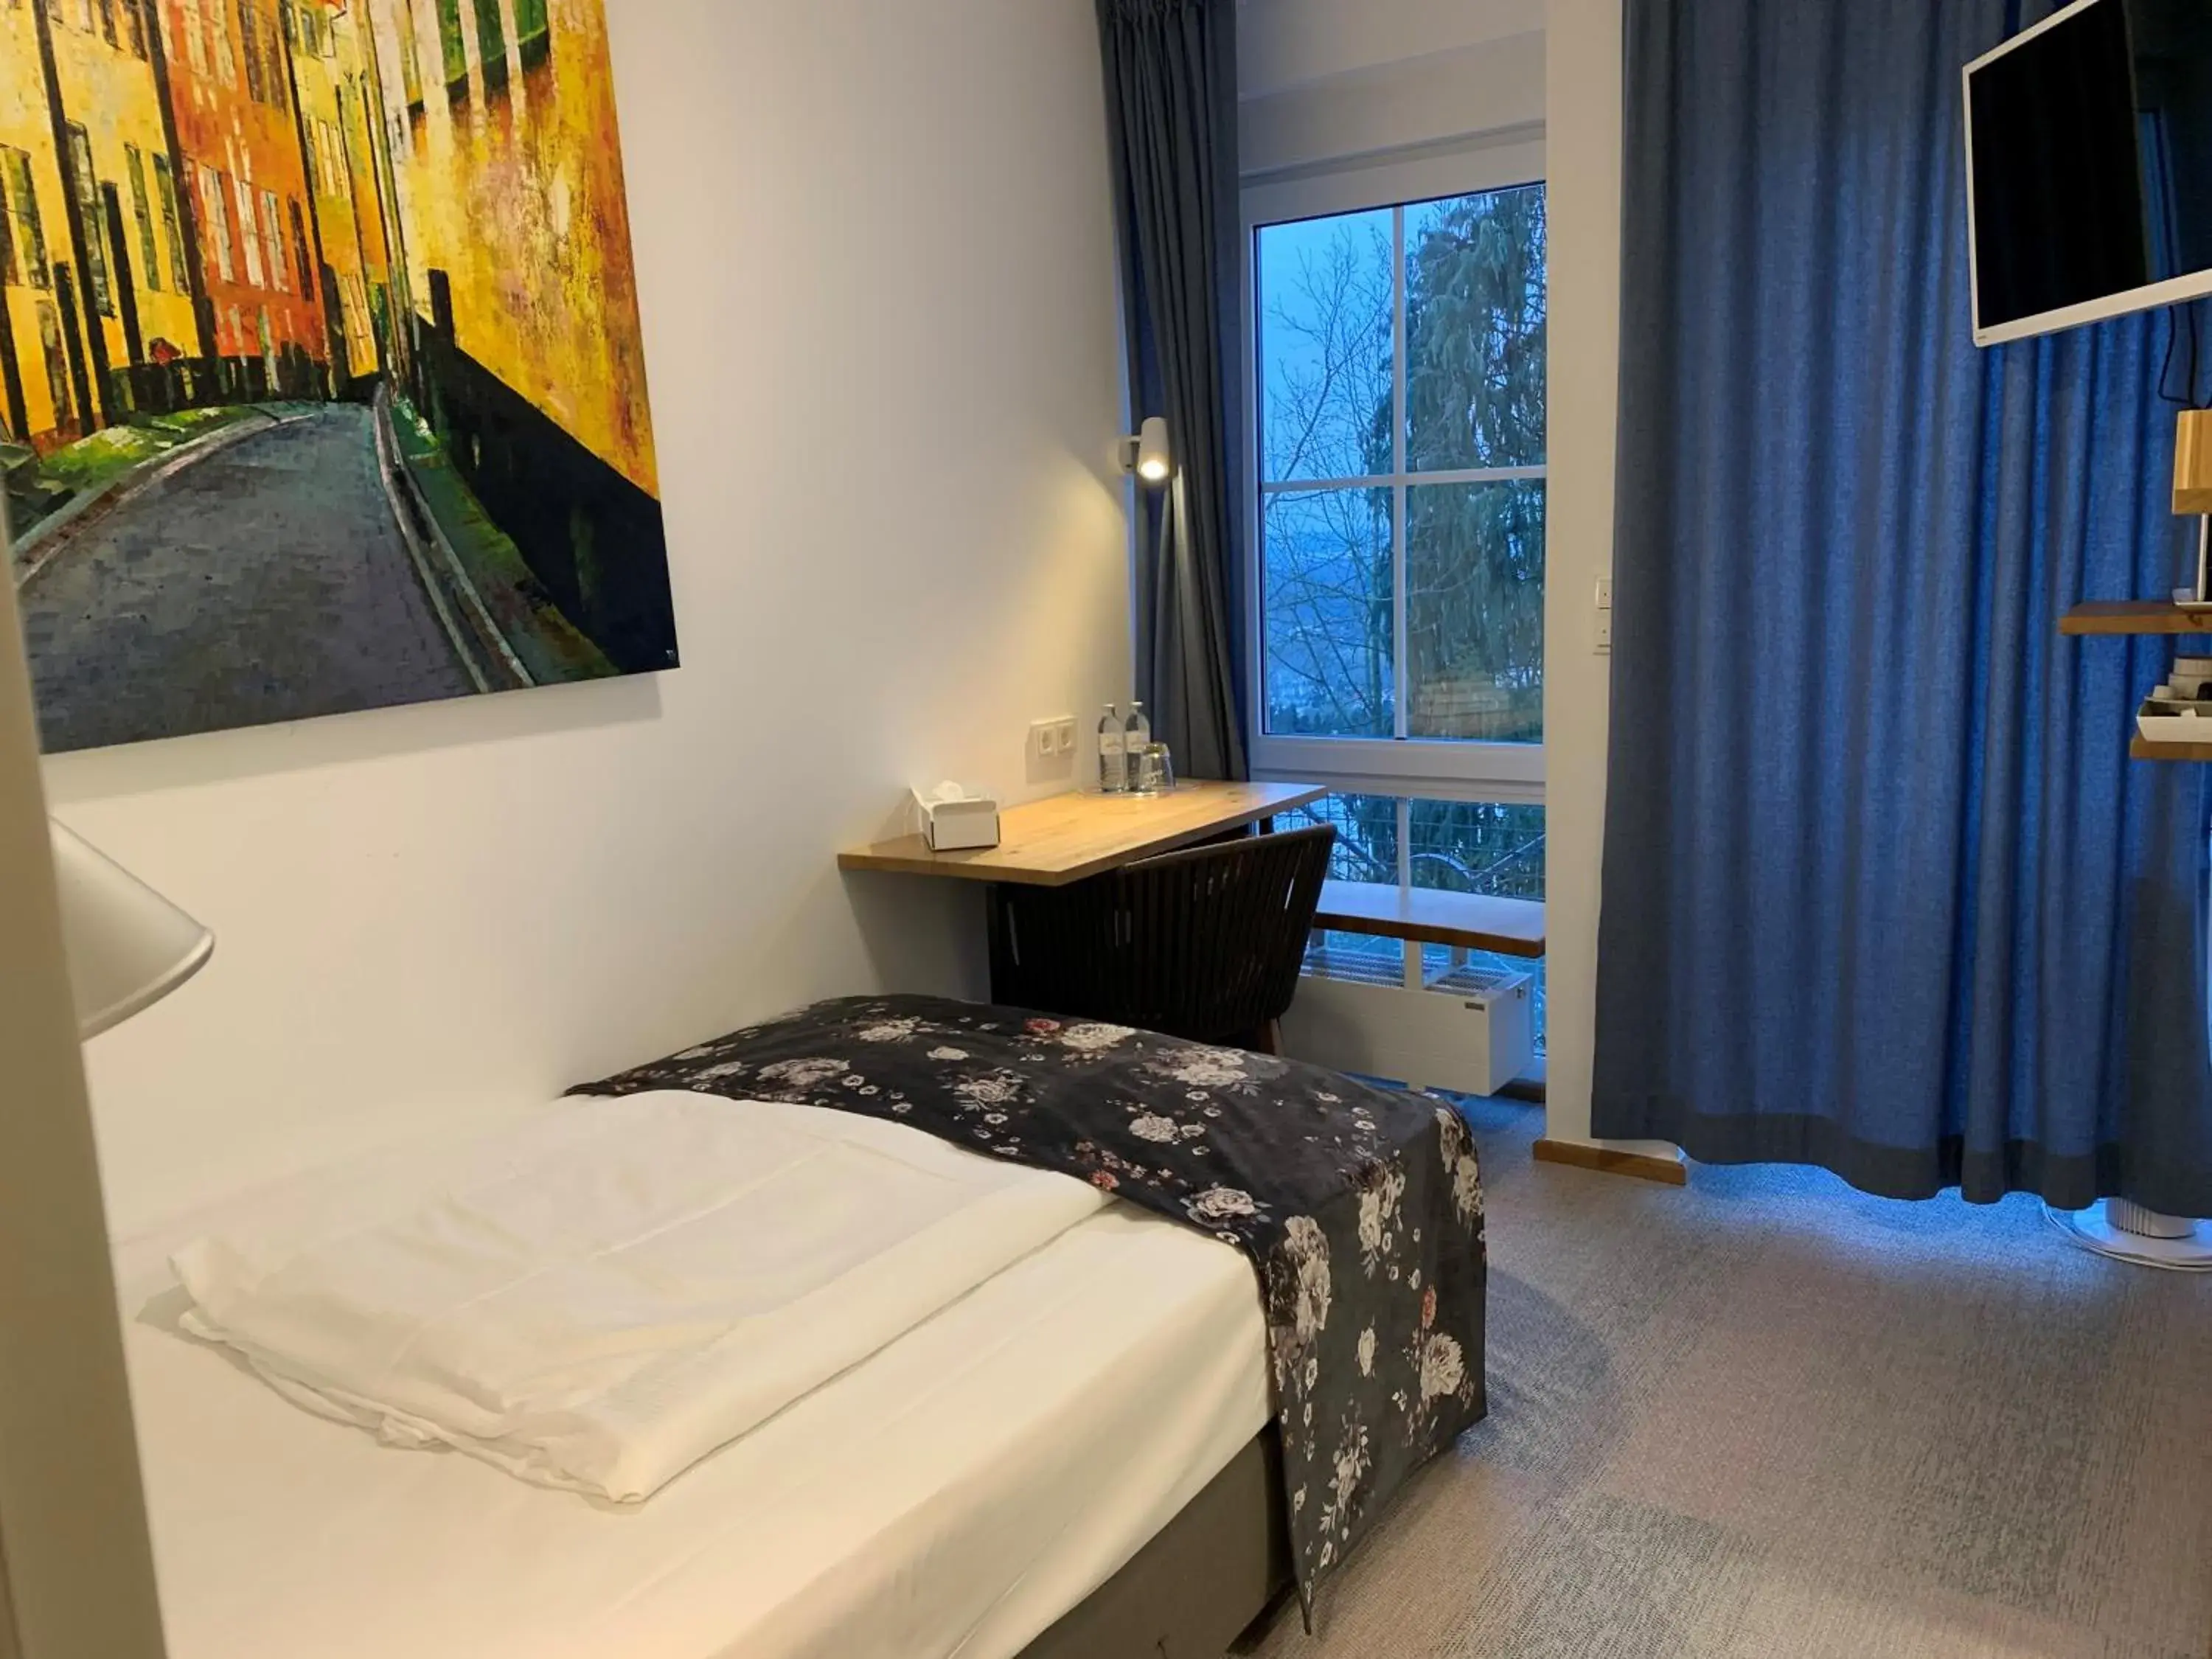 Photo of the whole room, Bed in Hotel Schöne Aussicht